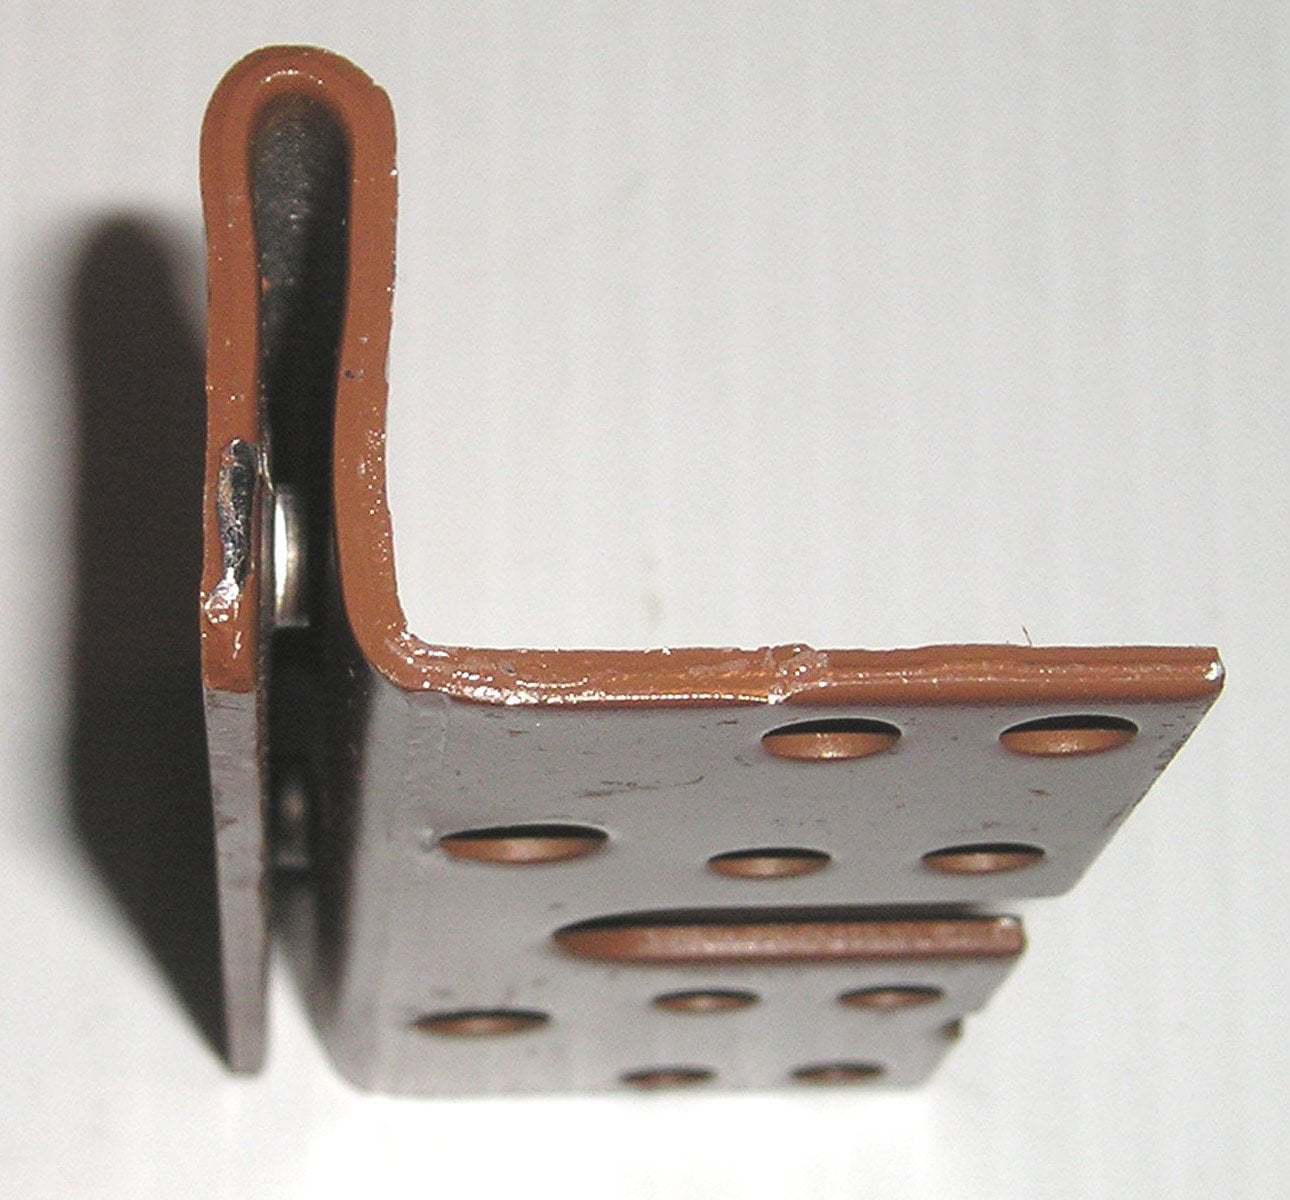 4 Bed Rail Double Hook Flat Slot Plates Fits 2" Bracket or Bed Post 13 ga Steel 